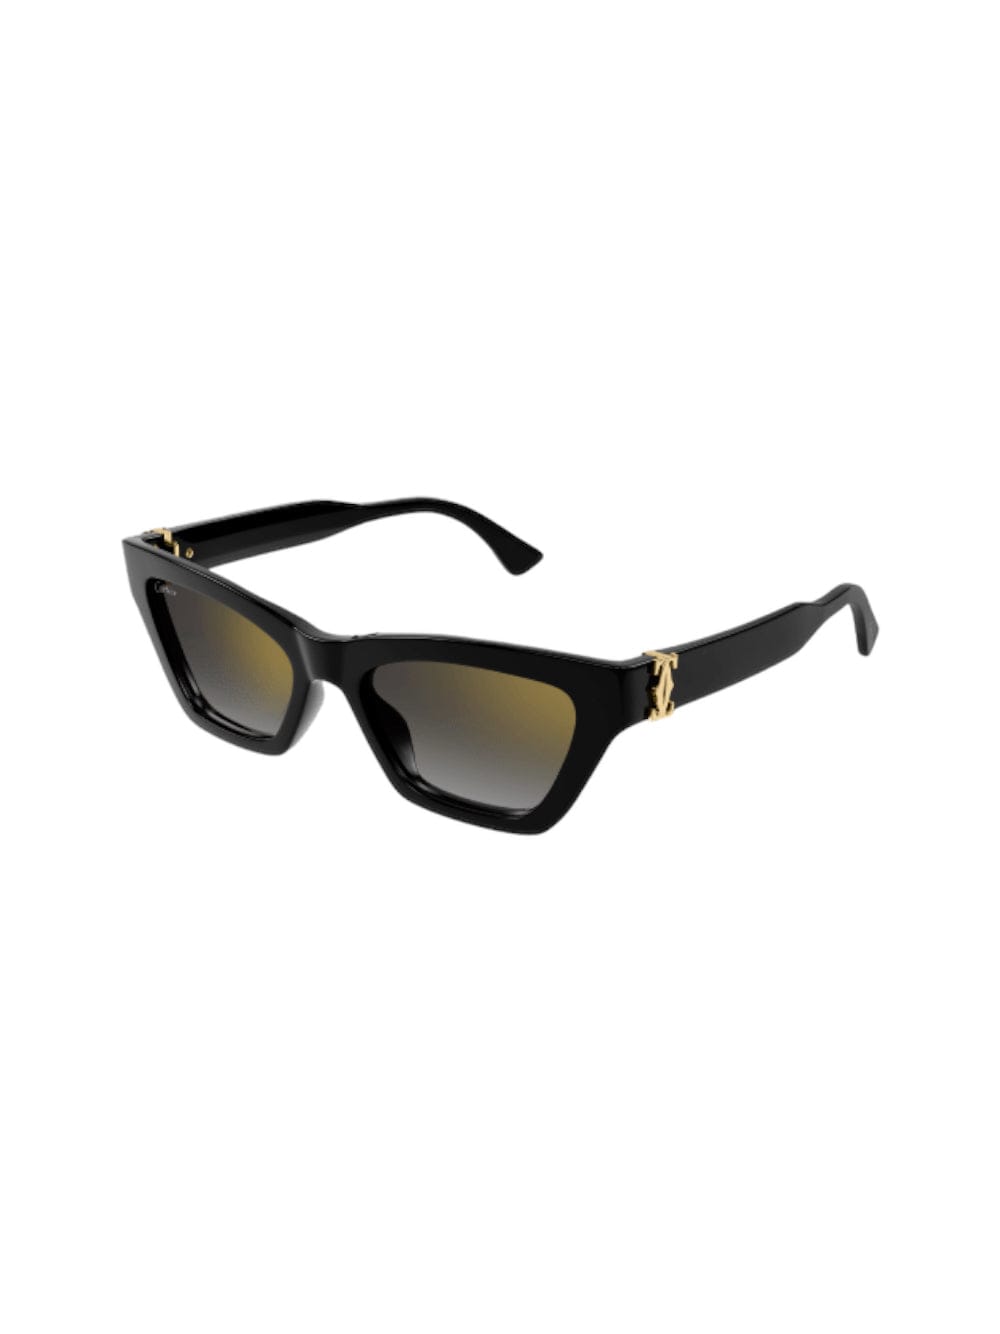 Cartier Ct 0437 Sunglasses